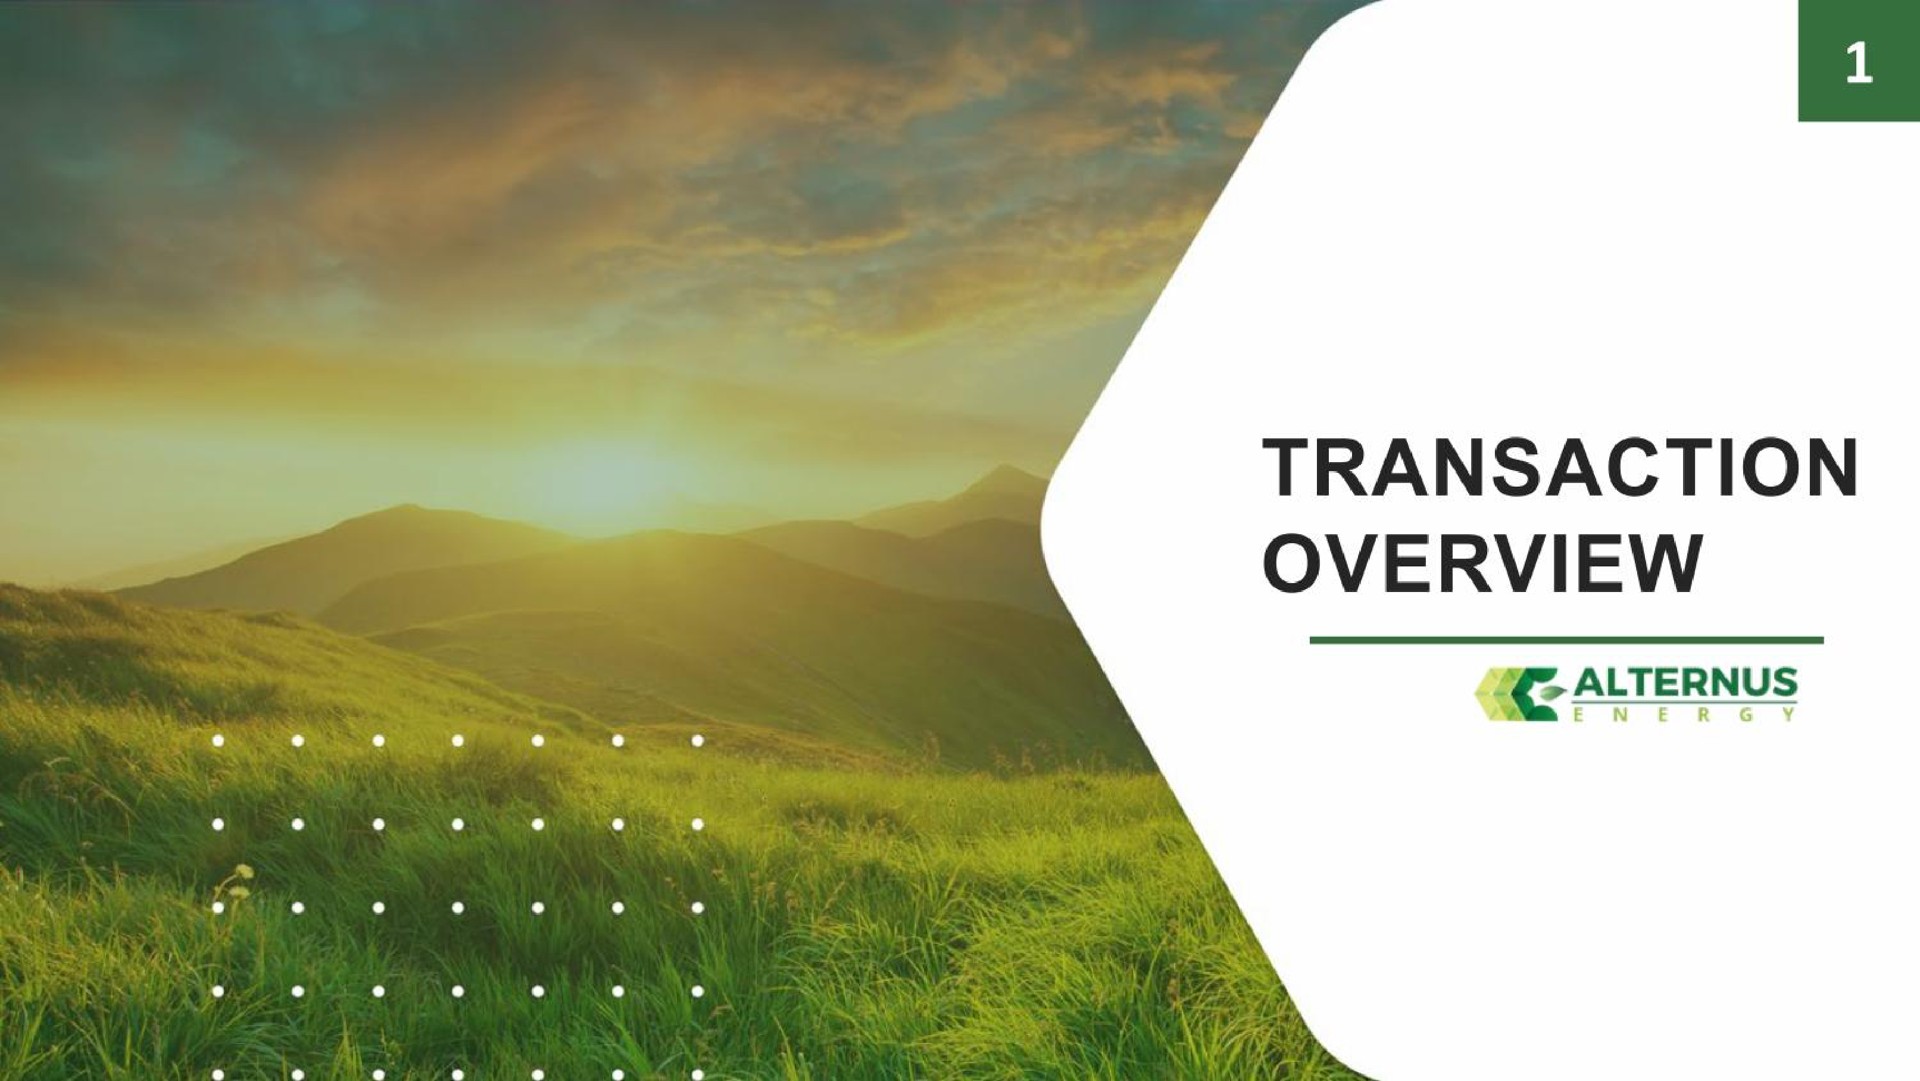 transaction overview | Alternus Energy